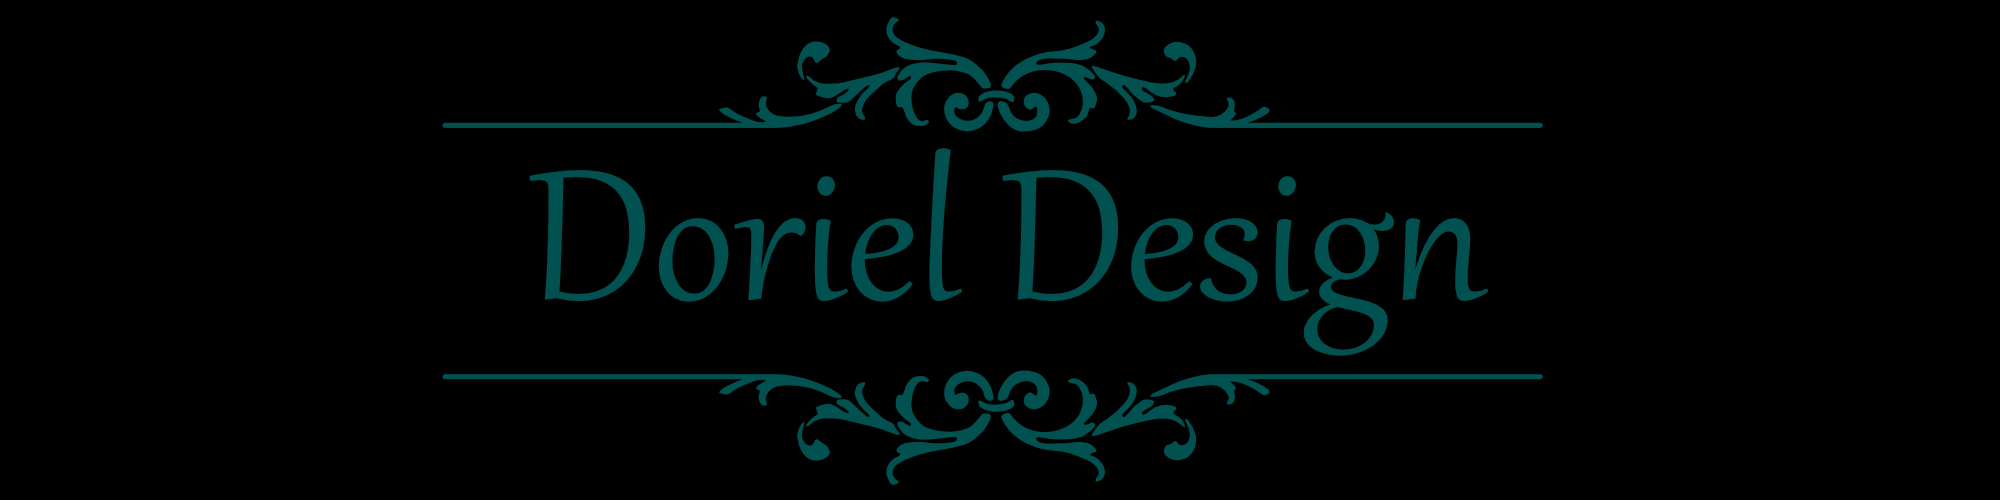 Doriel Design